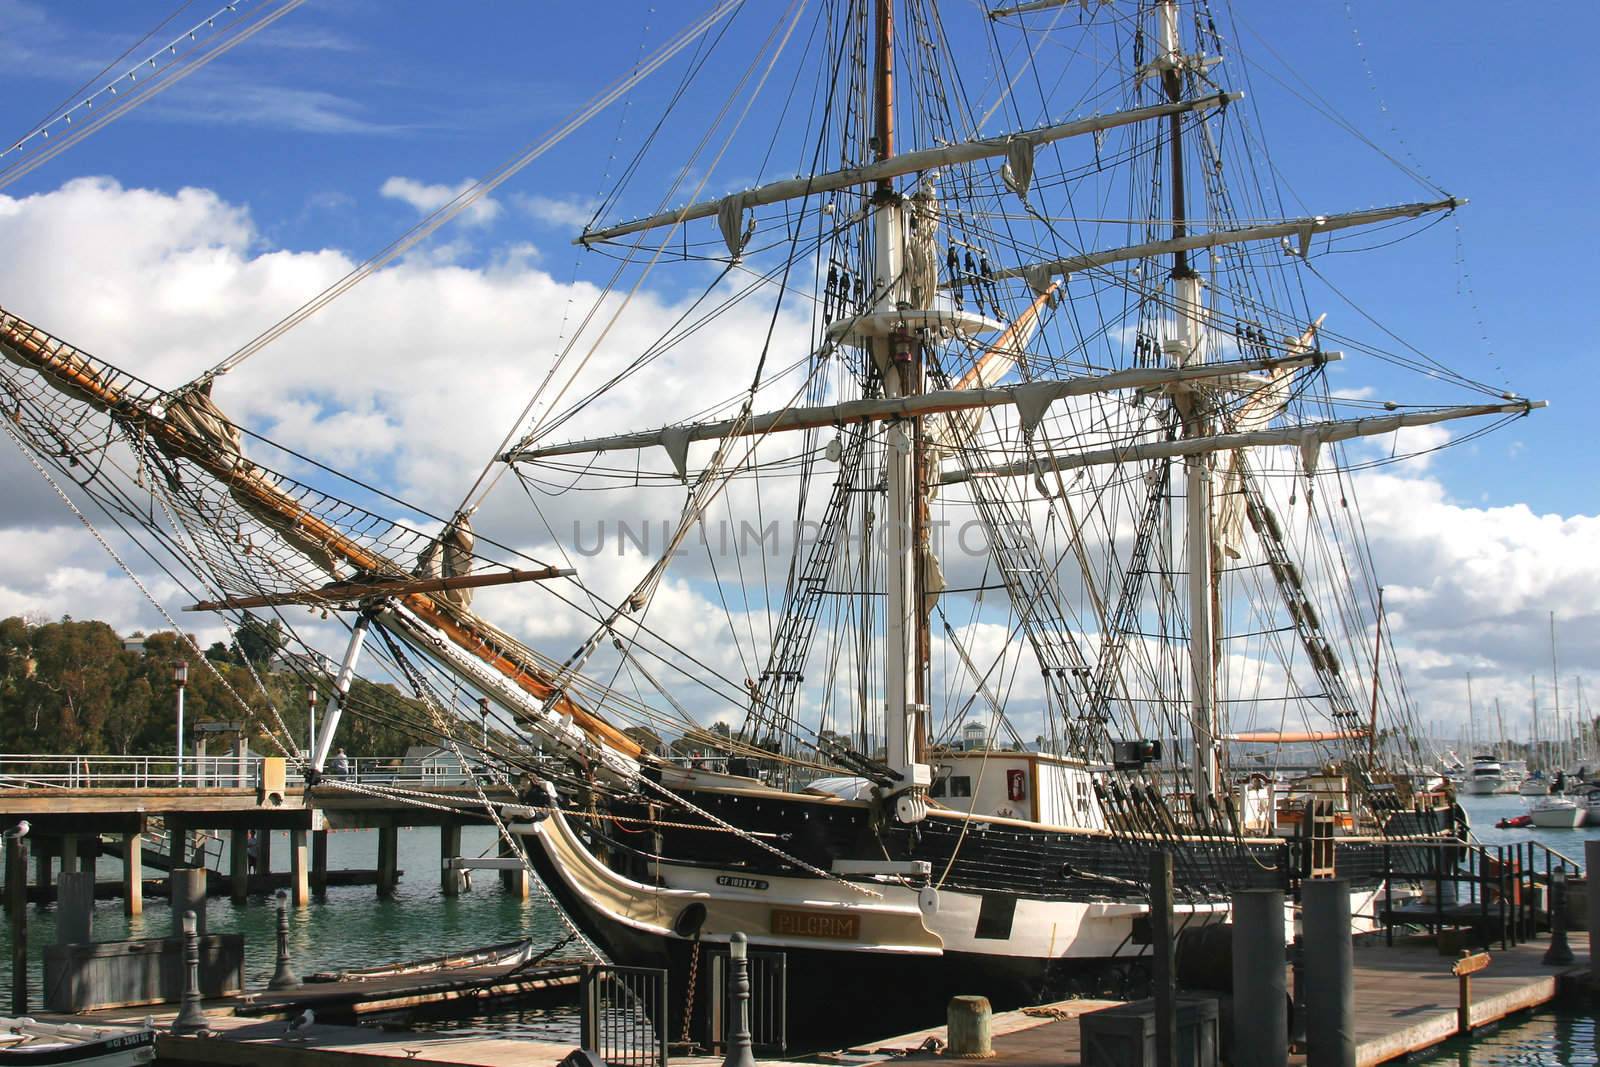 The Pilgrim docked in Dana Point Harbor.